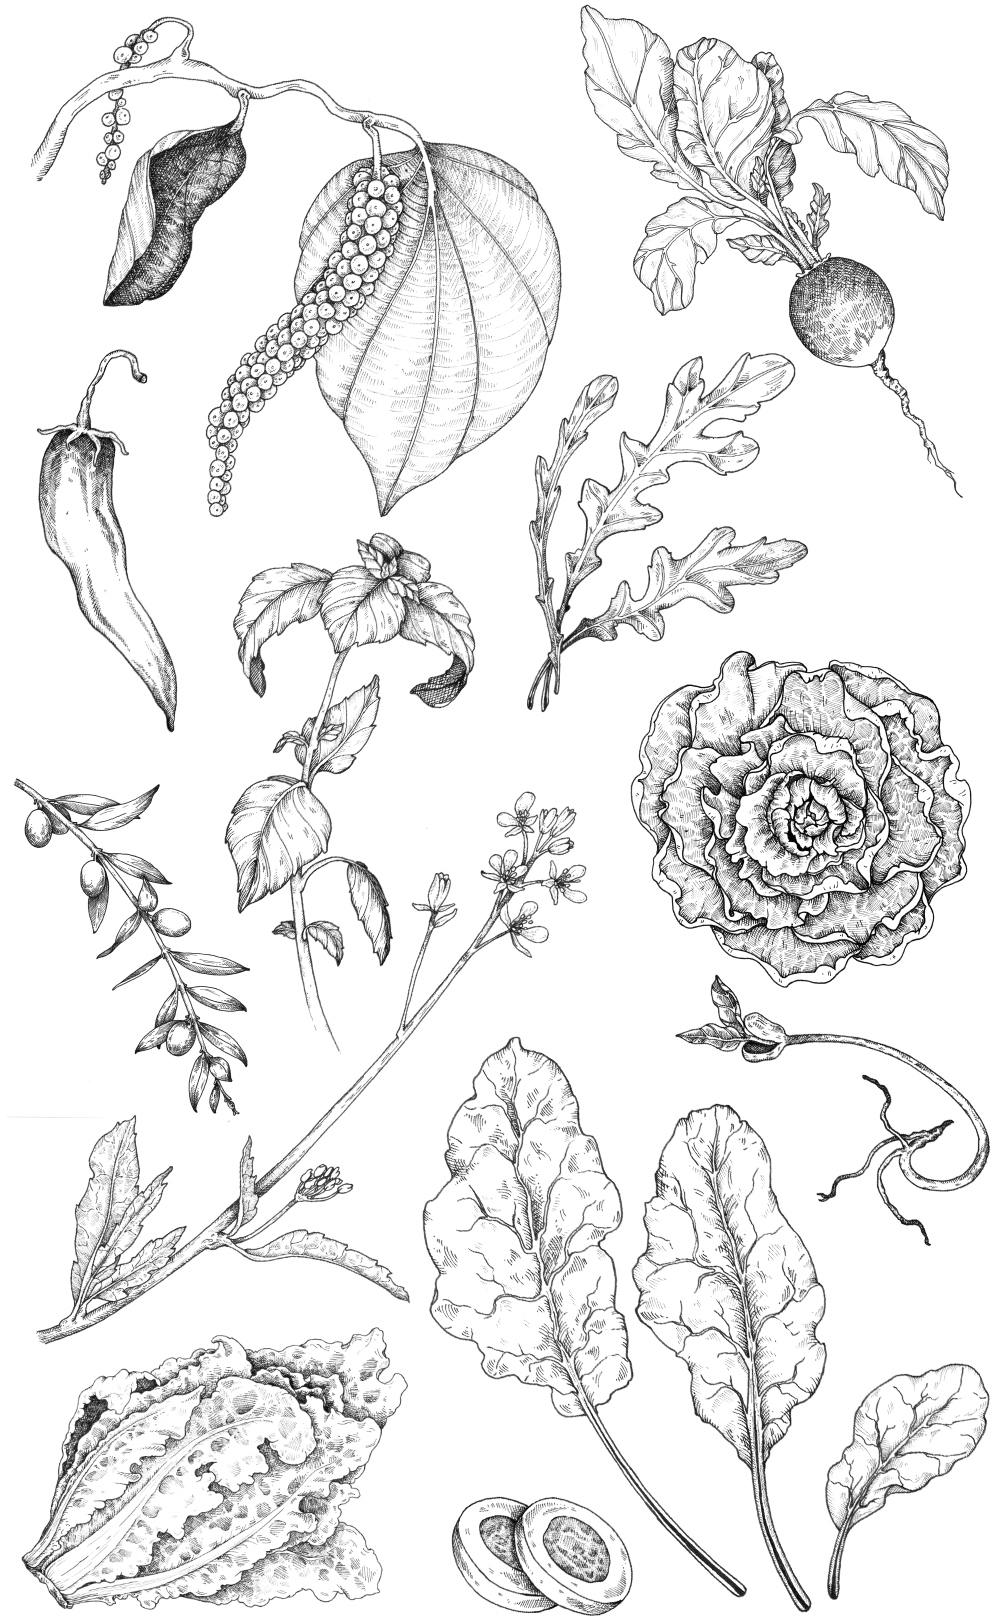 Pepper, radish, basil and other vegetables illustrations for Oscar Mayer Natural campain.